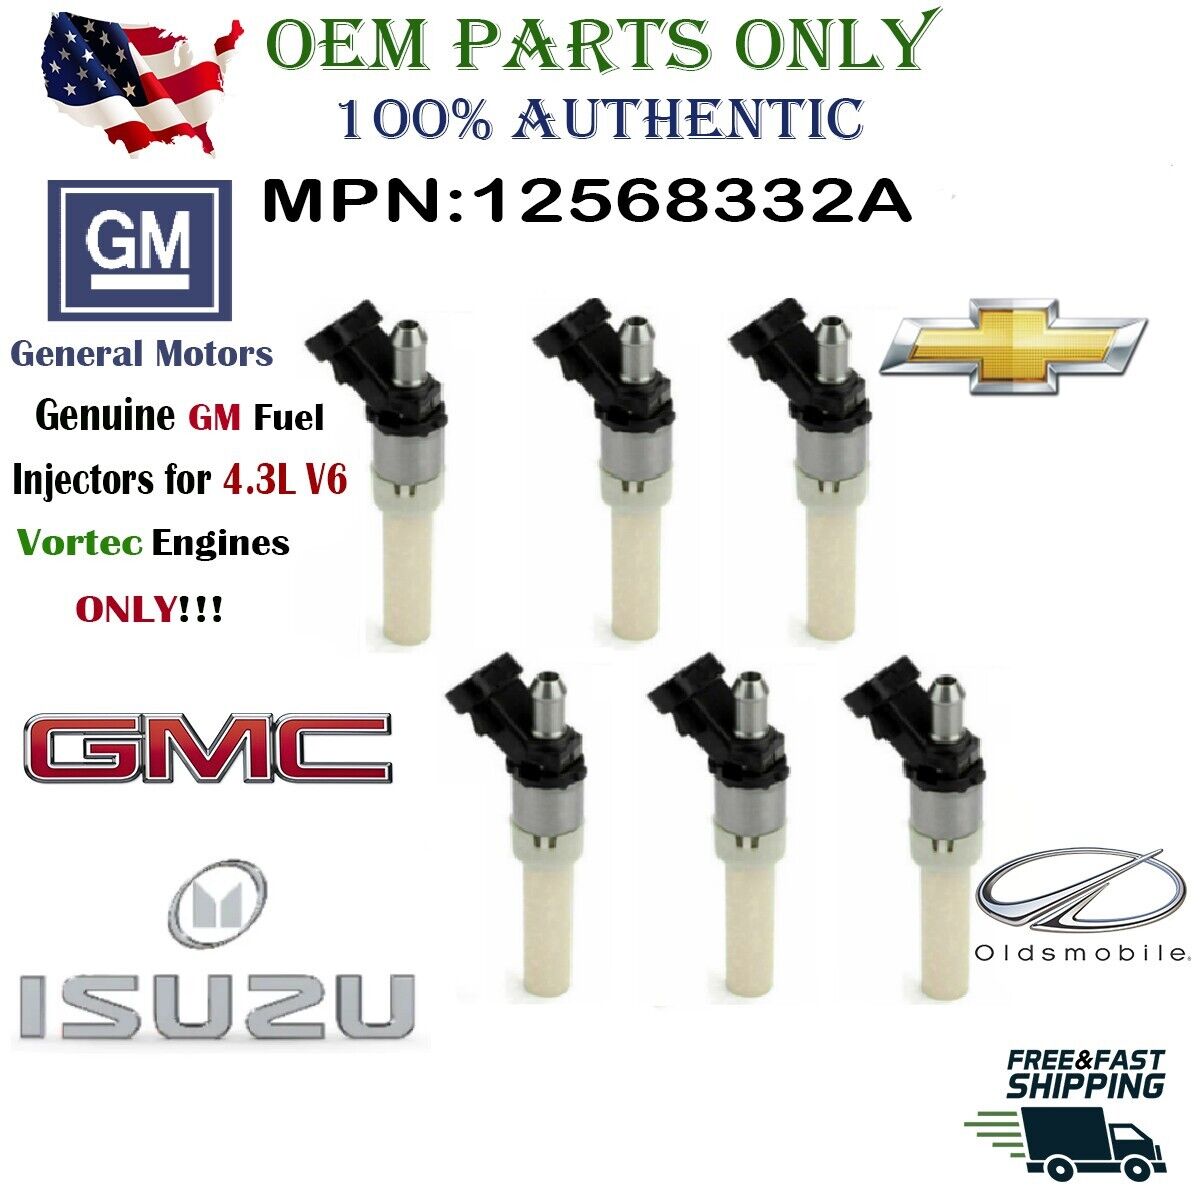 NEW OEM GM Spider x6 Fuel Injectors for 1996-2014 GMC Chevy Isuzu 4.3L V6 Vortec